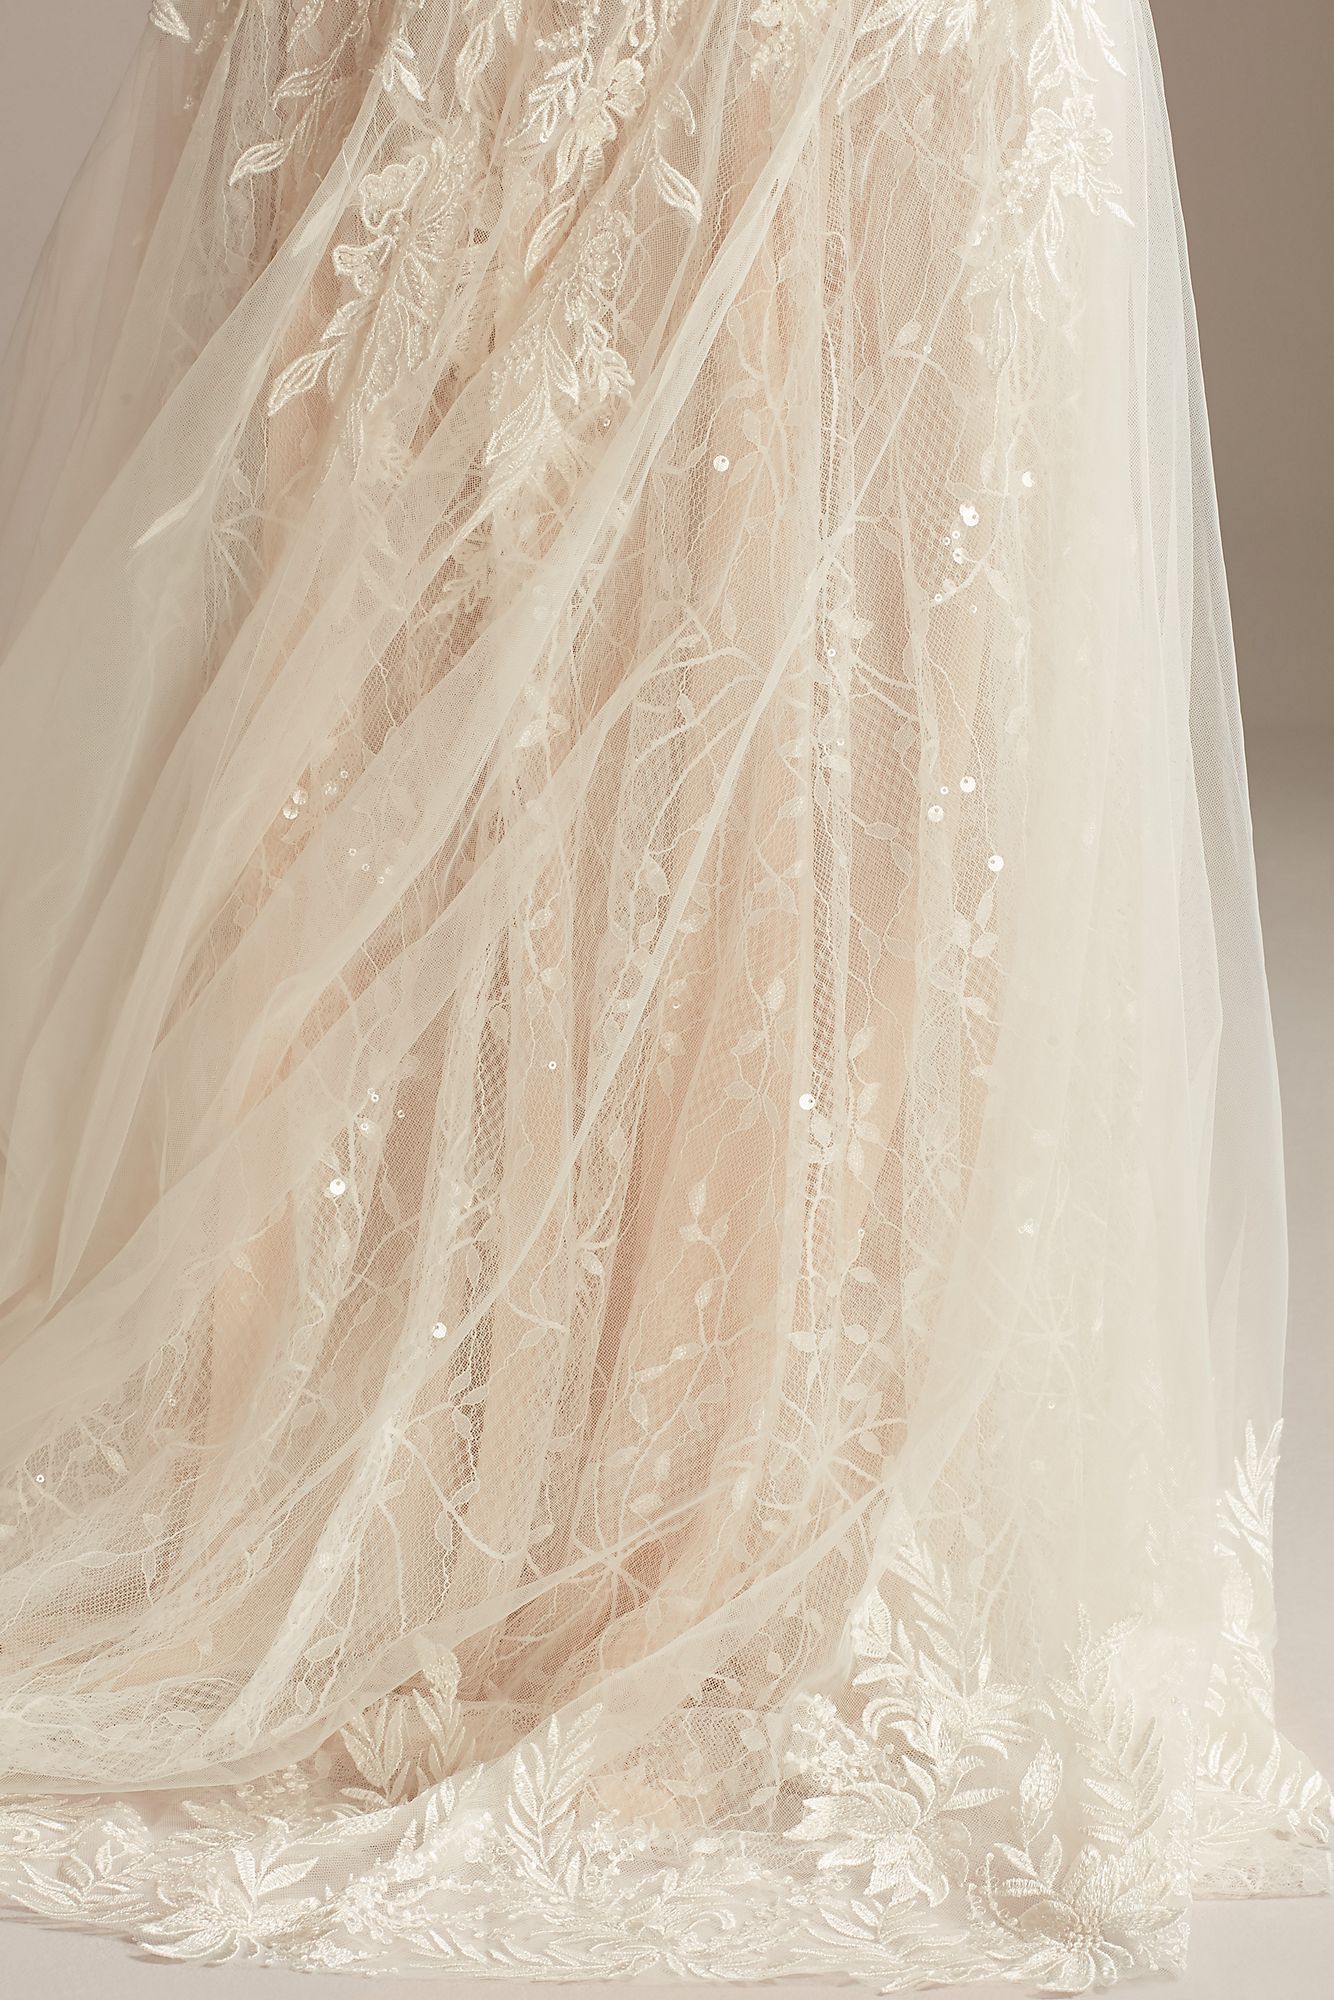 Long Trumpt Strapless Sweetheart Neckline Lace Corset Bodice Wedding Dress MS251207